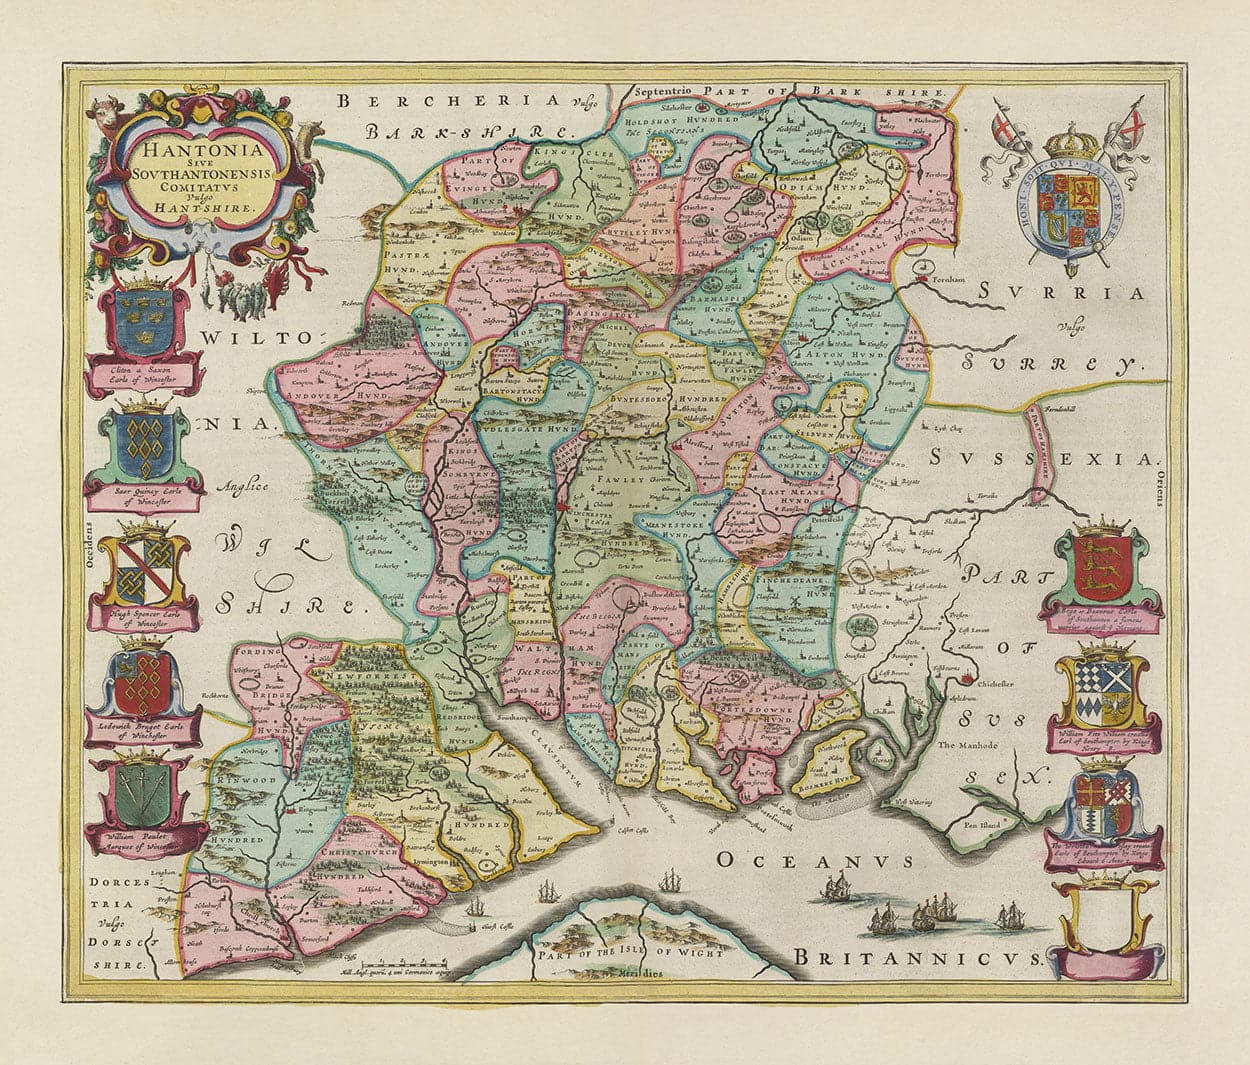 Ancienne Carte de Hampshire, 1665 par Joan Blaaeu - Winchester, Portsmouth, Southampton, Basingstoke, Farnborough, Havant